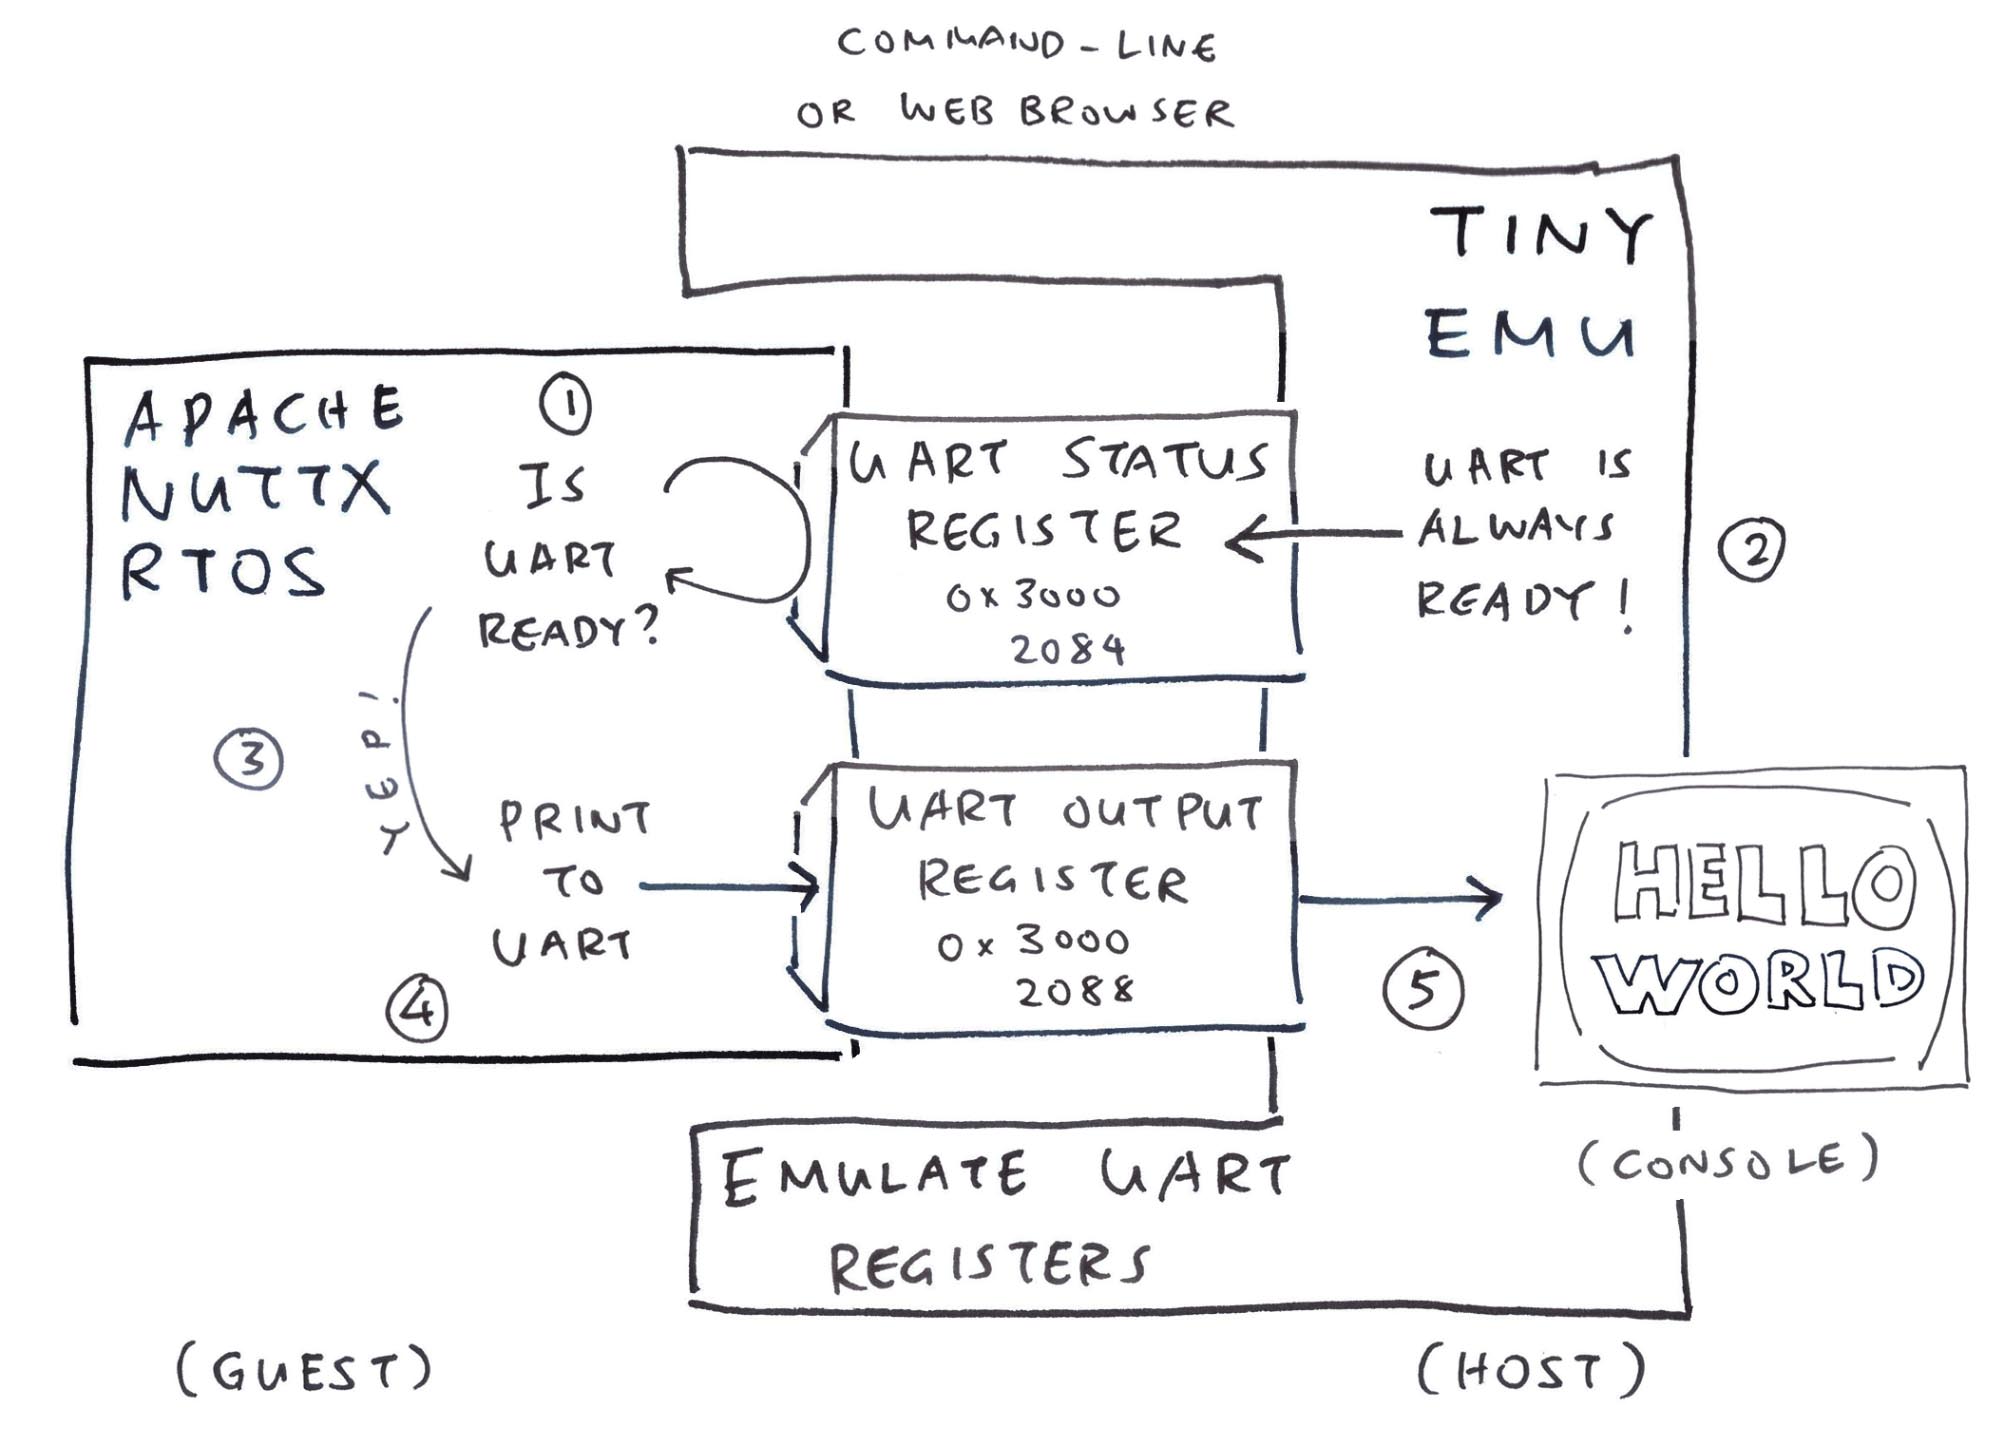 Emulating the UART Registers with TinyEMU